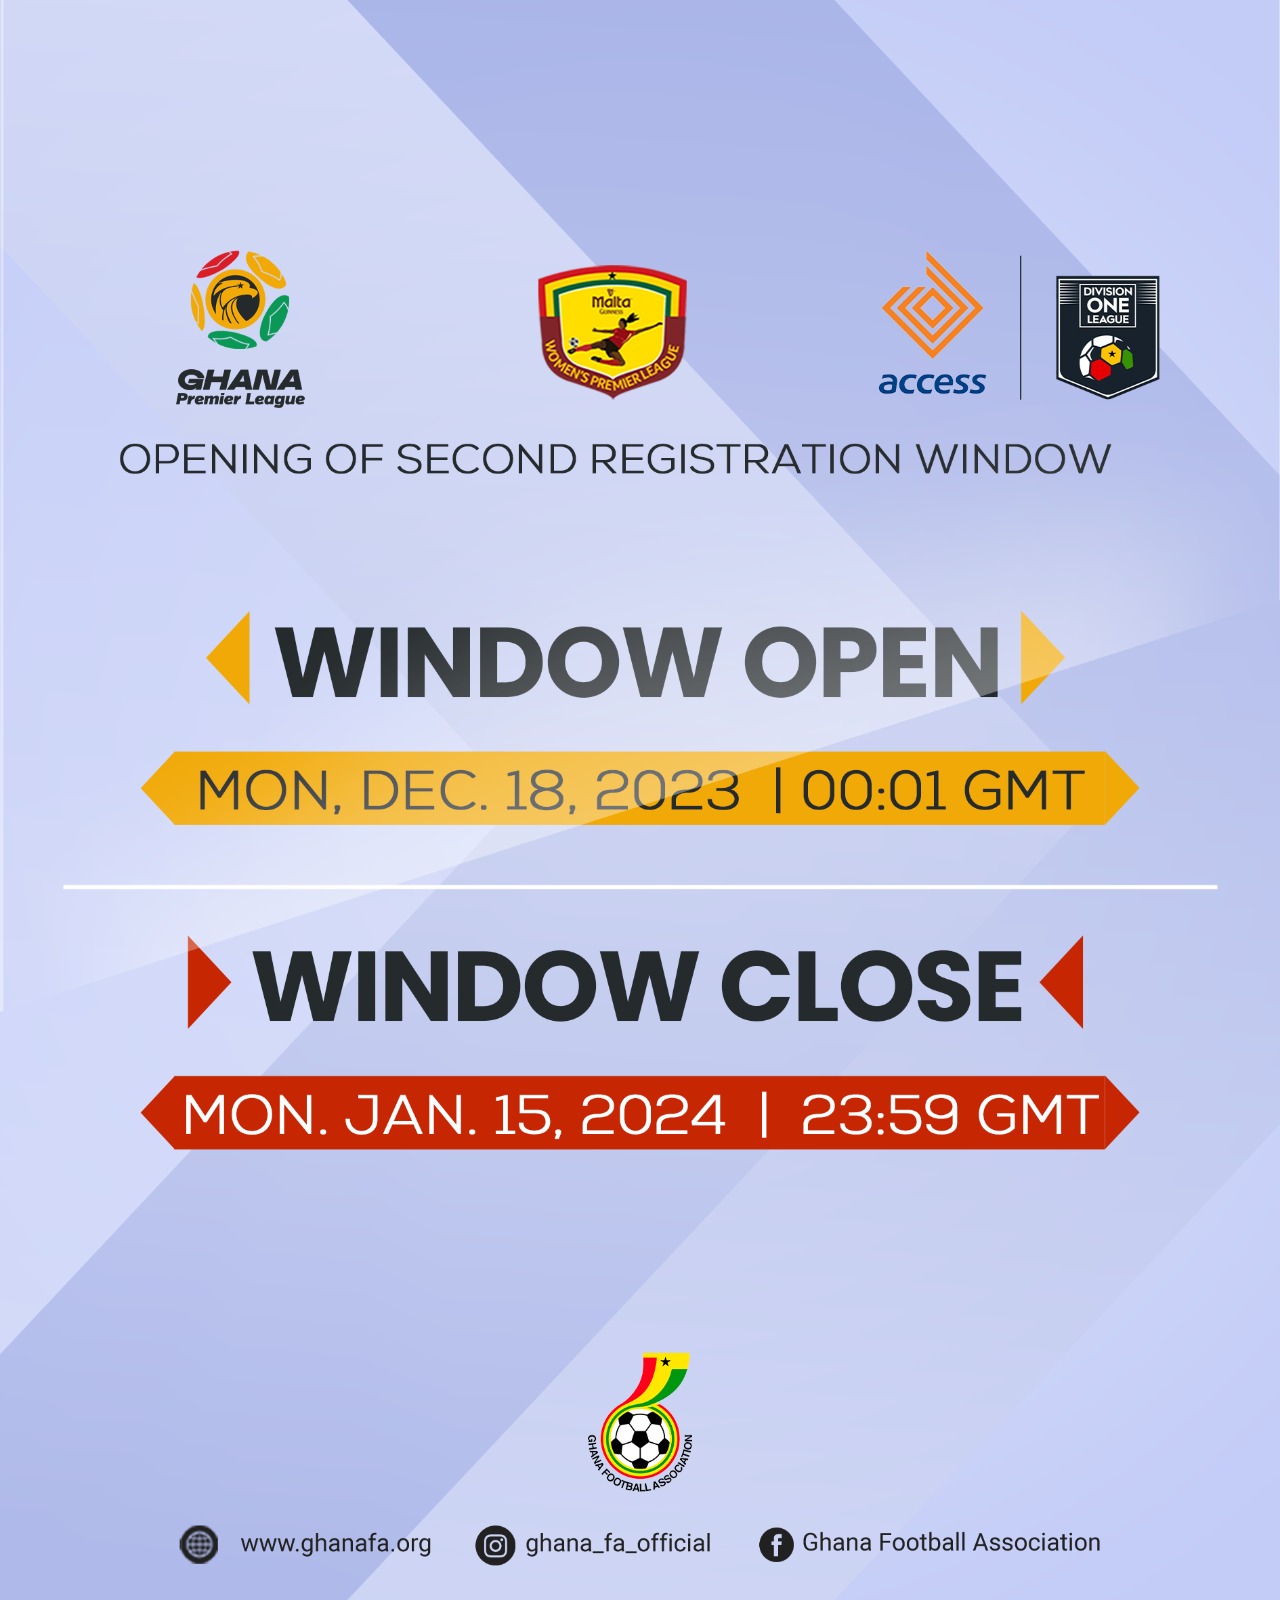 Second Registration window opens December 18